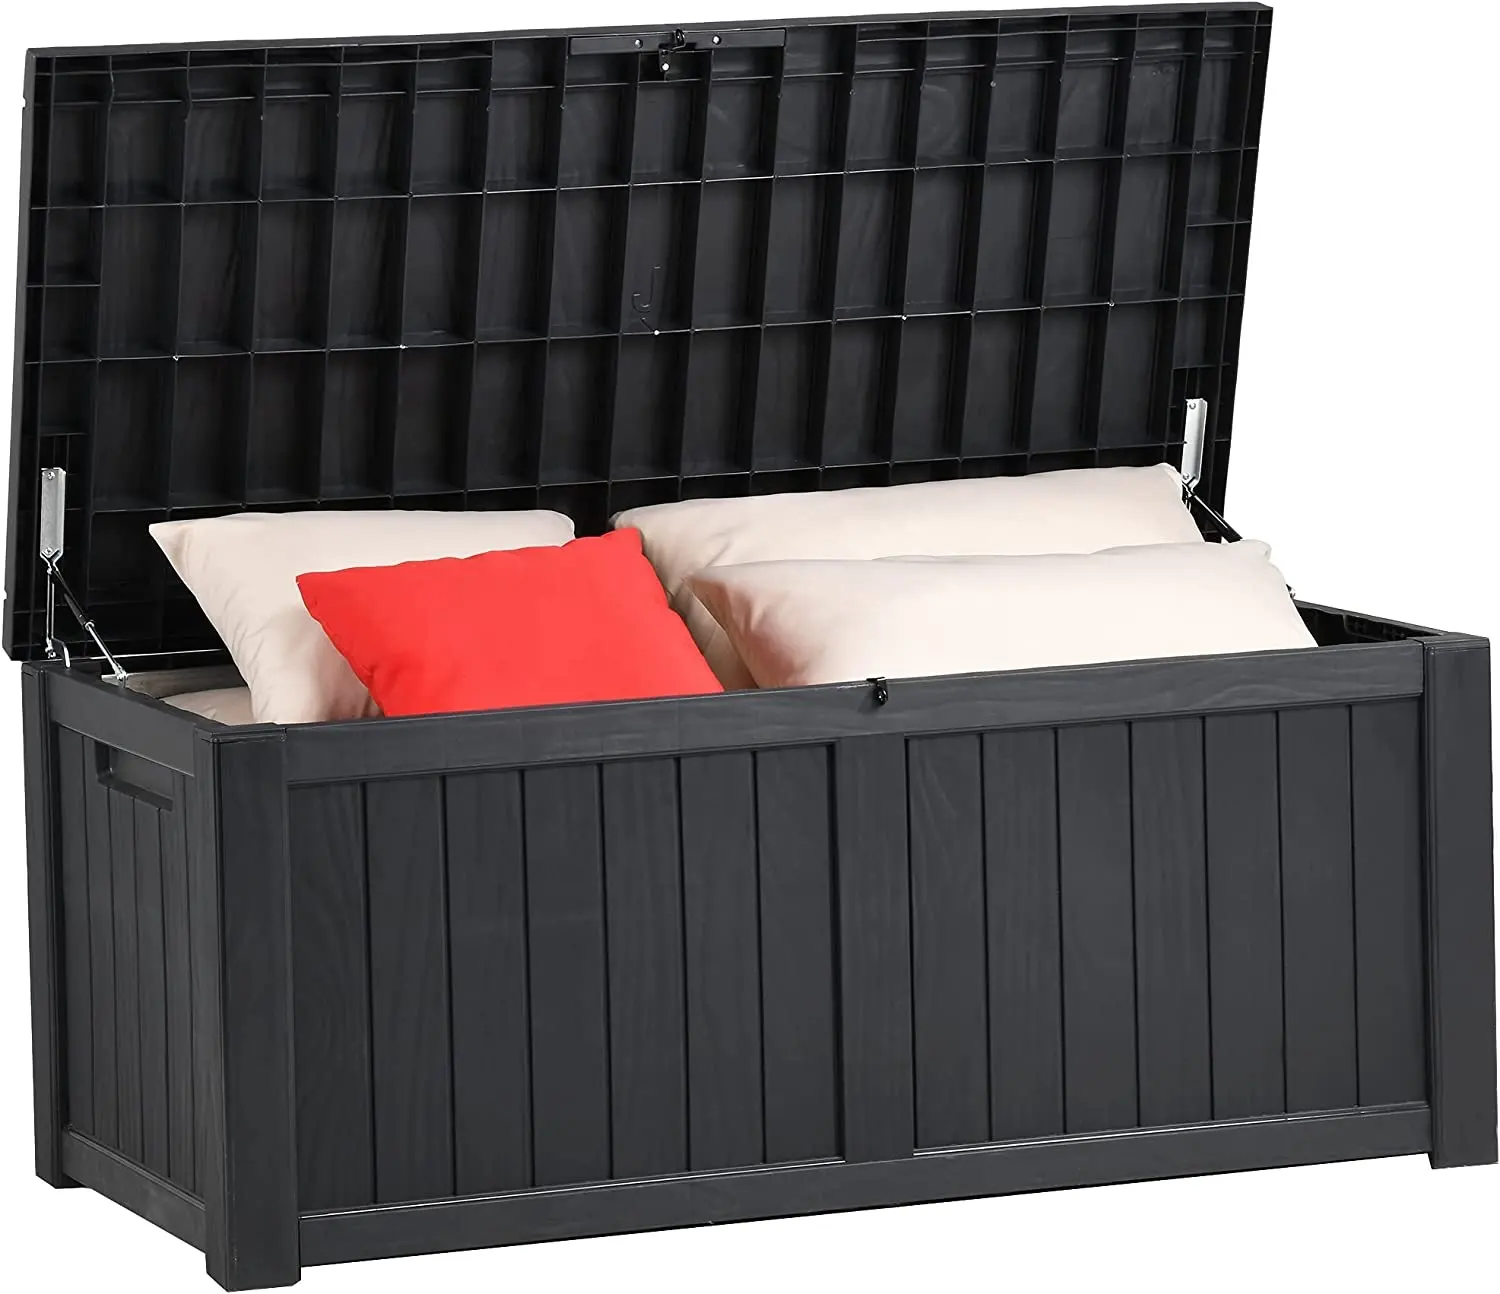 Large Capacity 76 Gallon Waterproof Rattan Plastic Outdoor Deck Patio Garden Storage Box